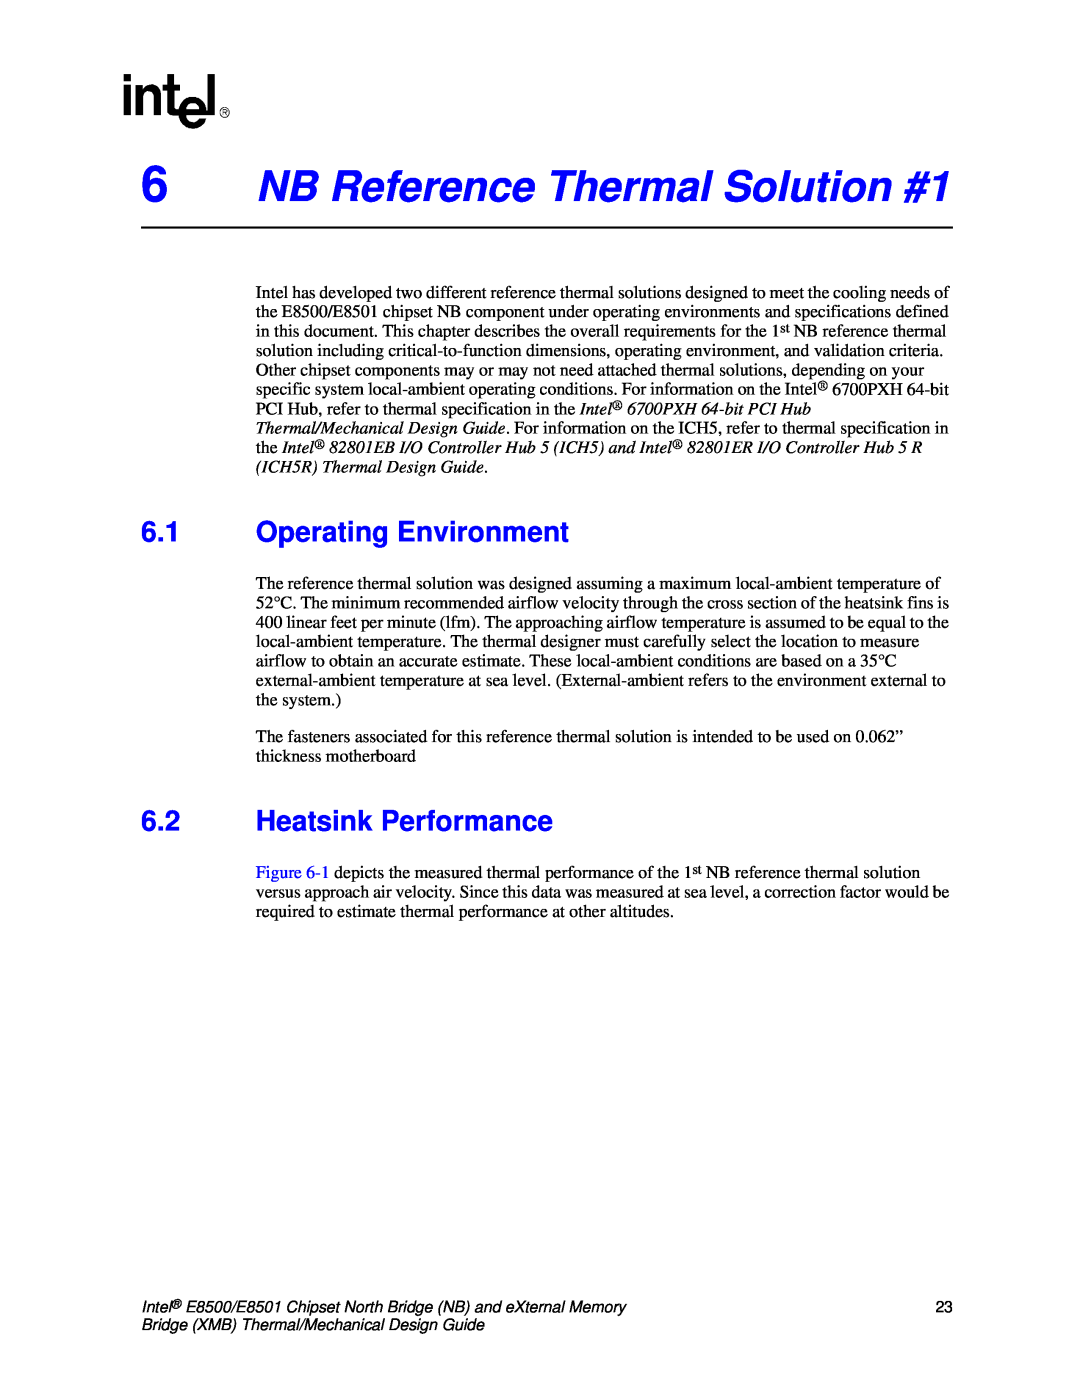 Intel E8501 manual 6NB Reference Thermal Solution #1, 6.1Operating Environment, 6.2Heatsink Performance 